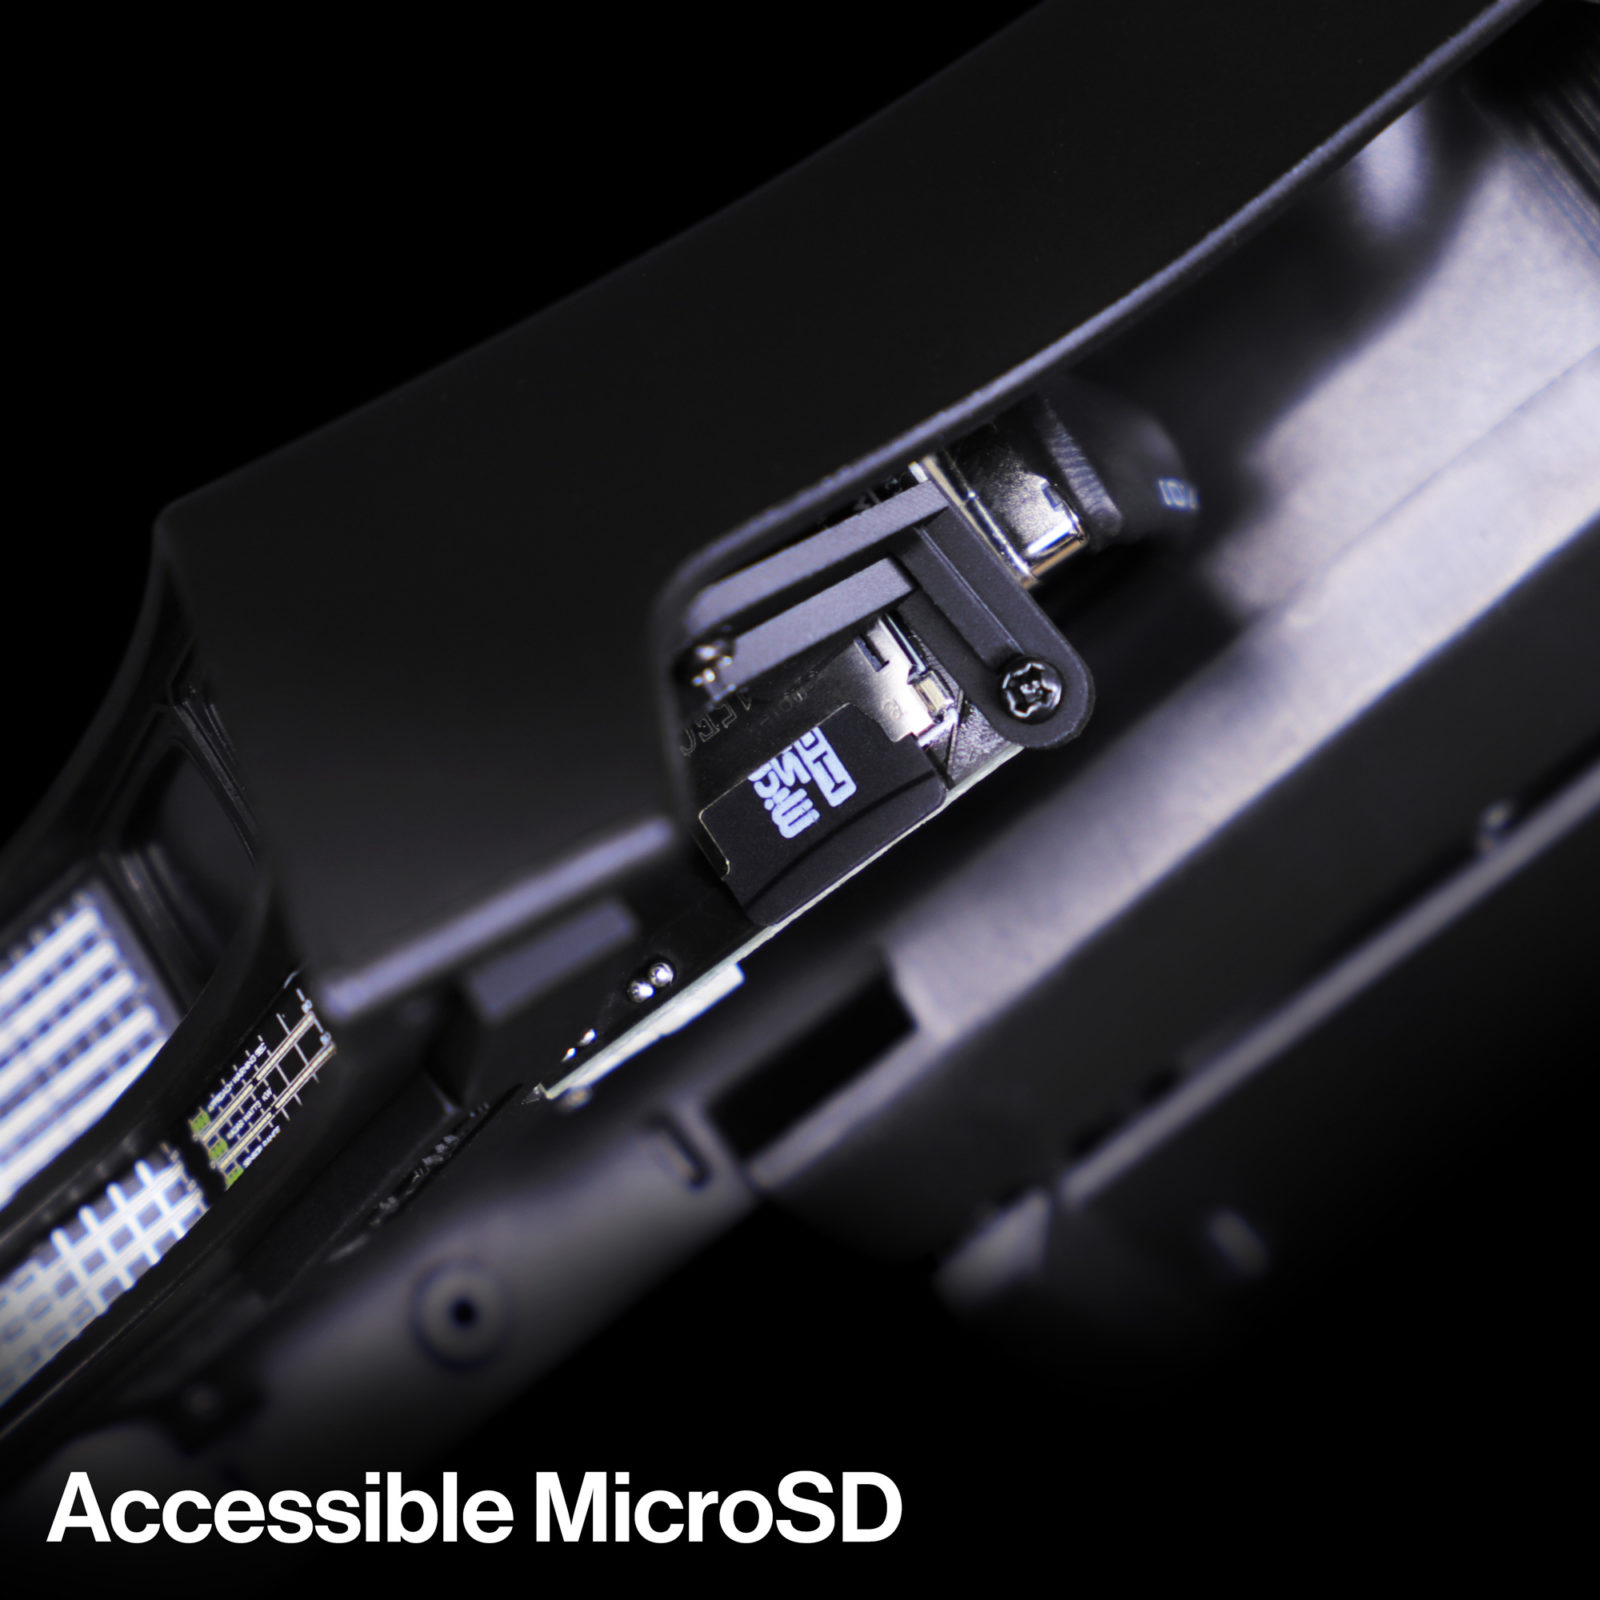 Accessible MicroSD